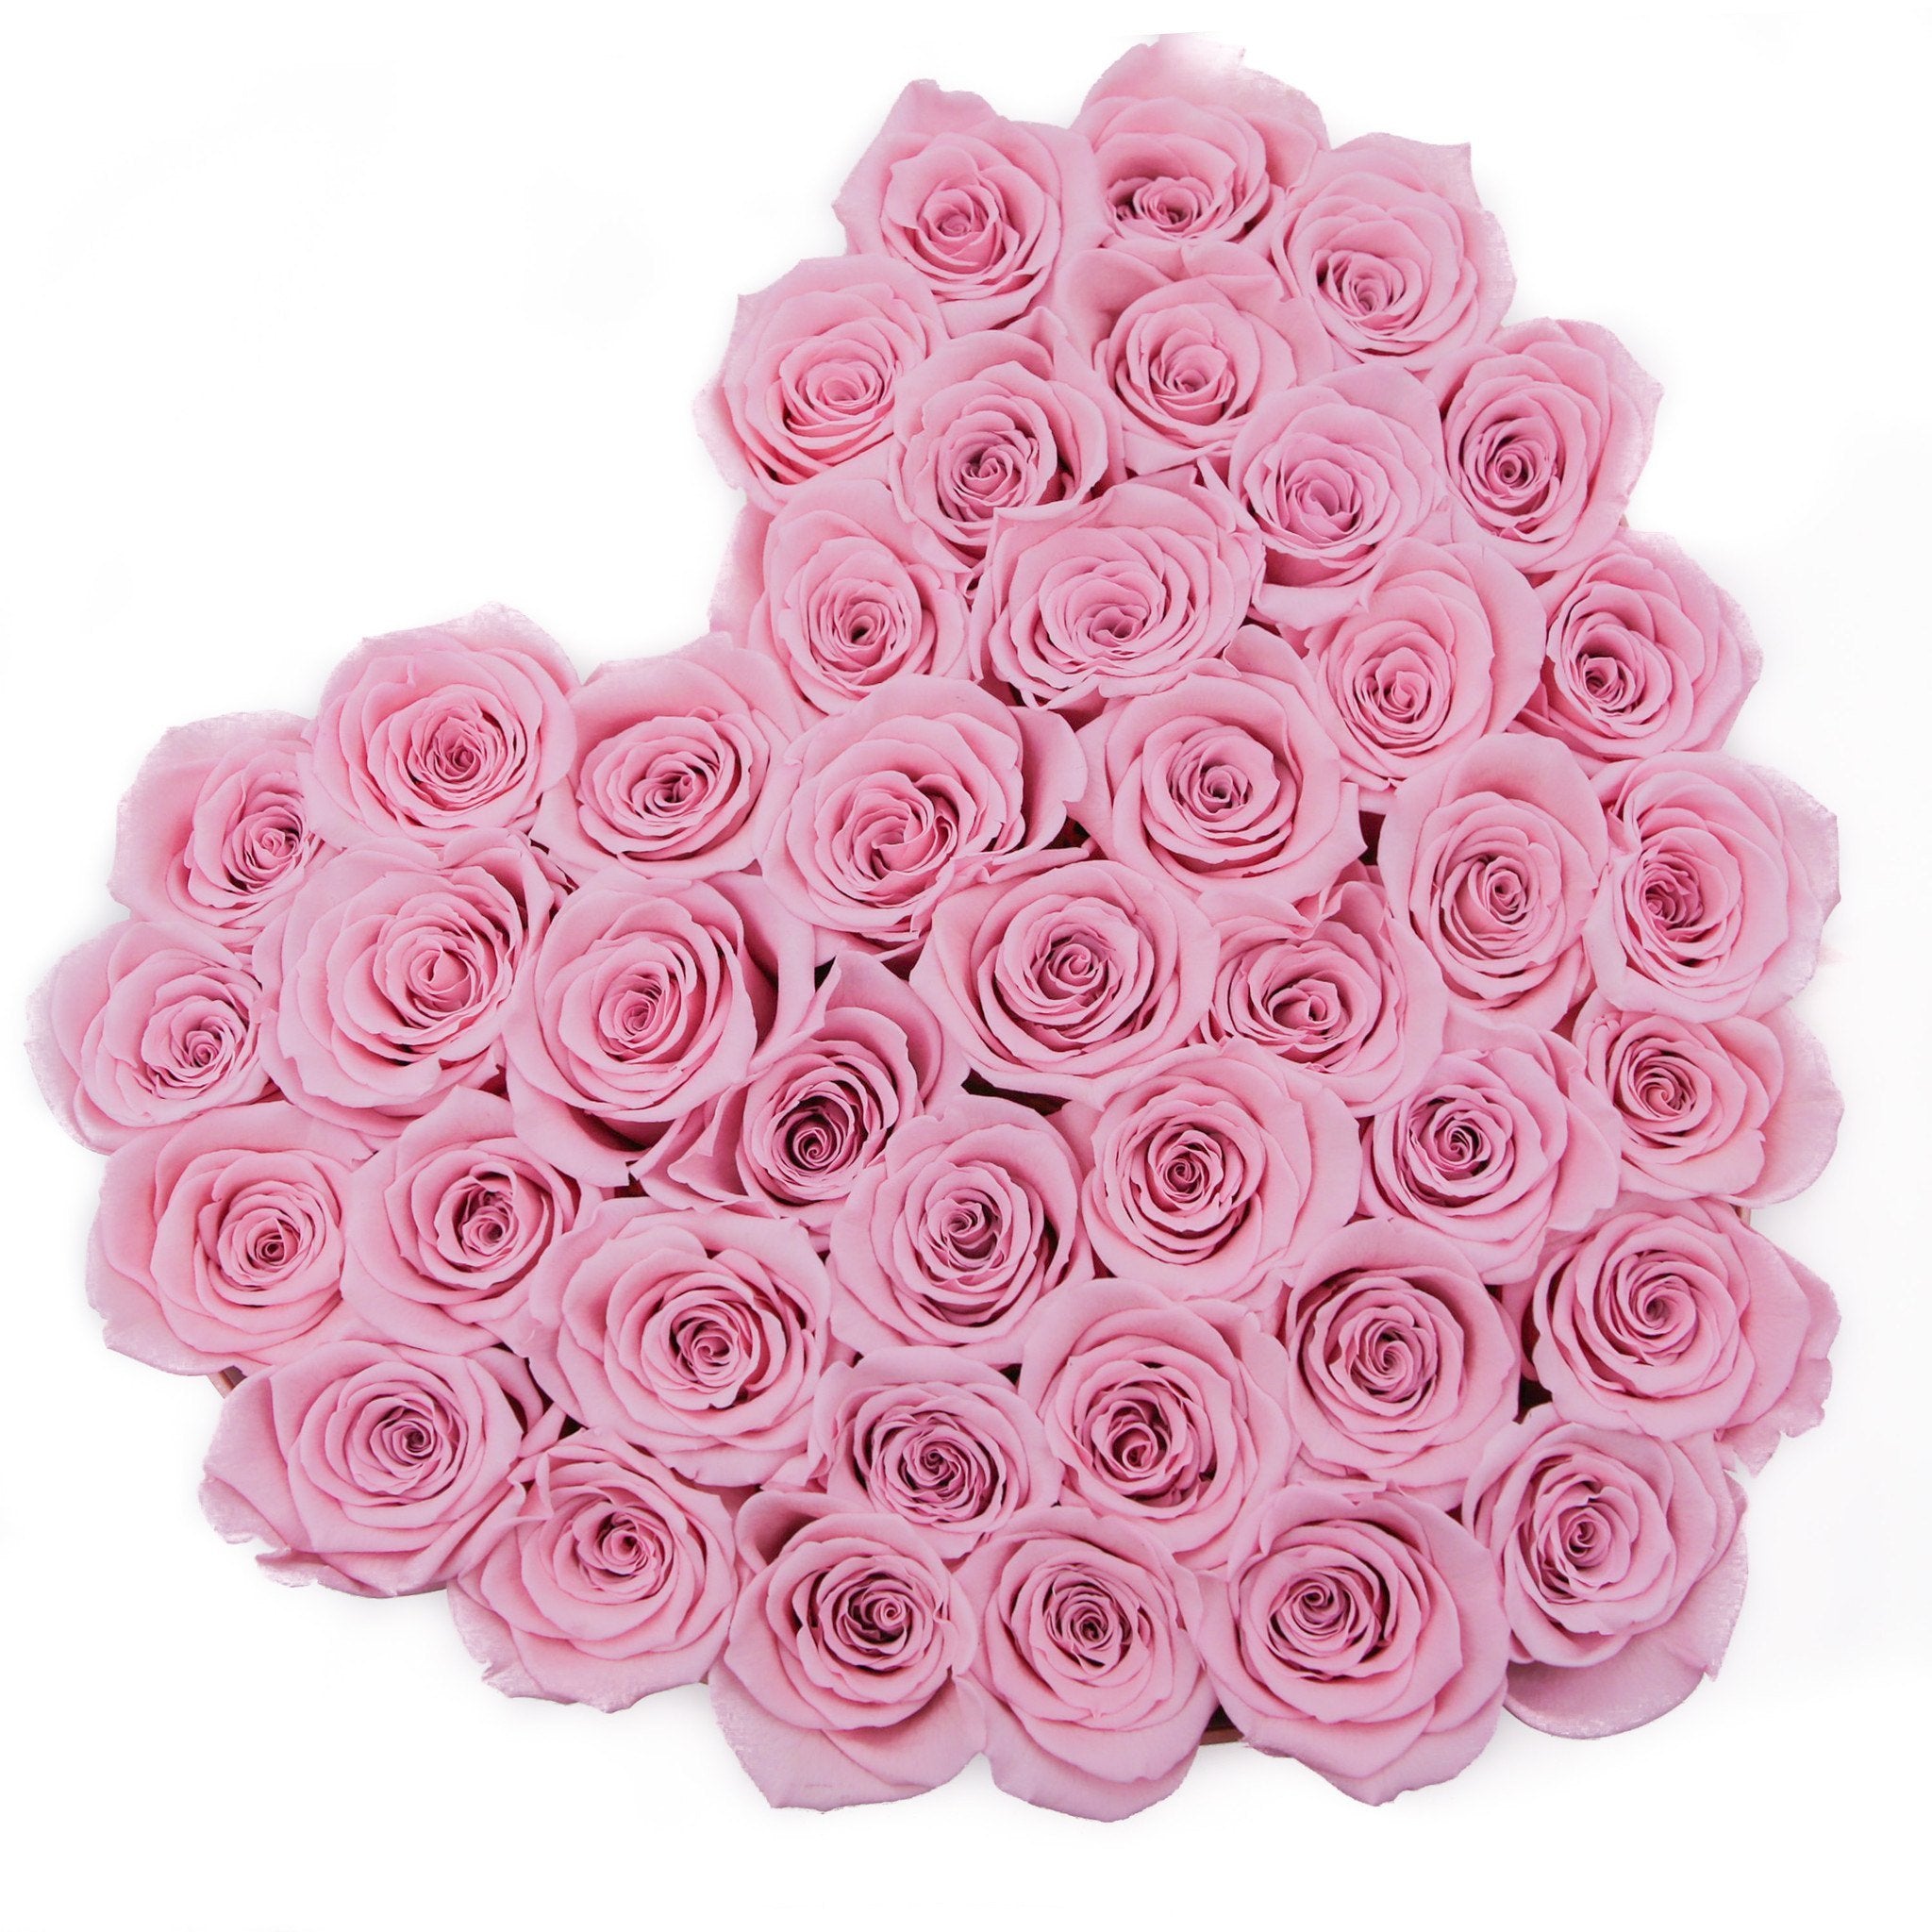 Inimă din trandafiri roz-cutie roz pal